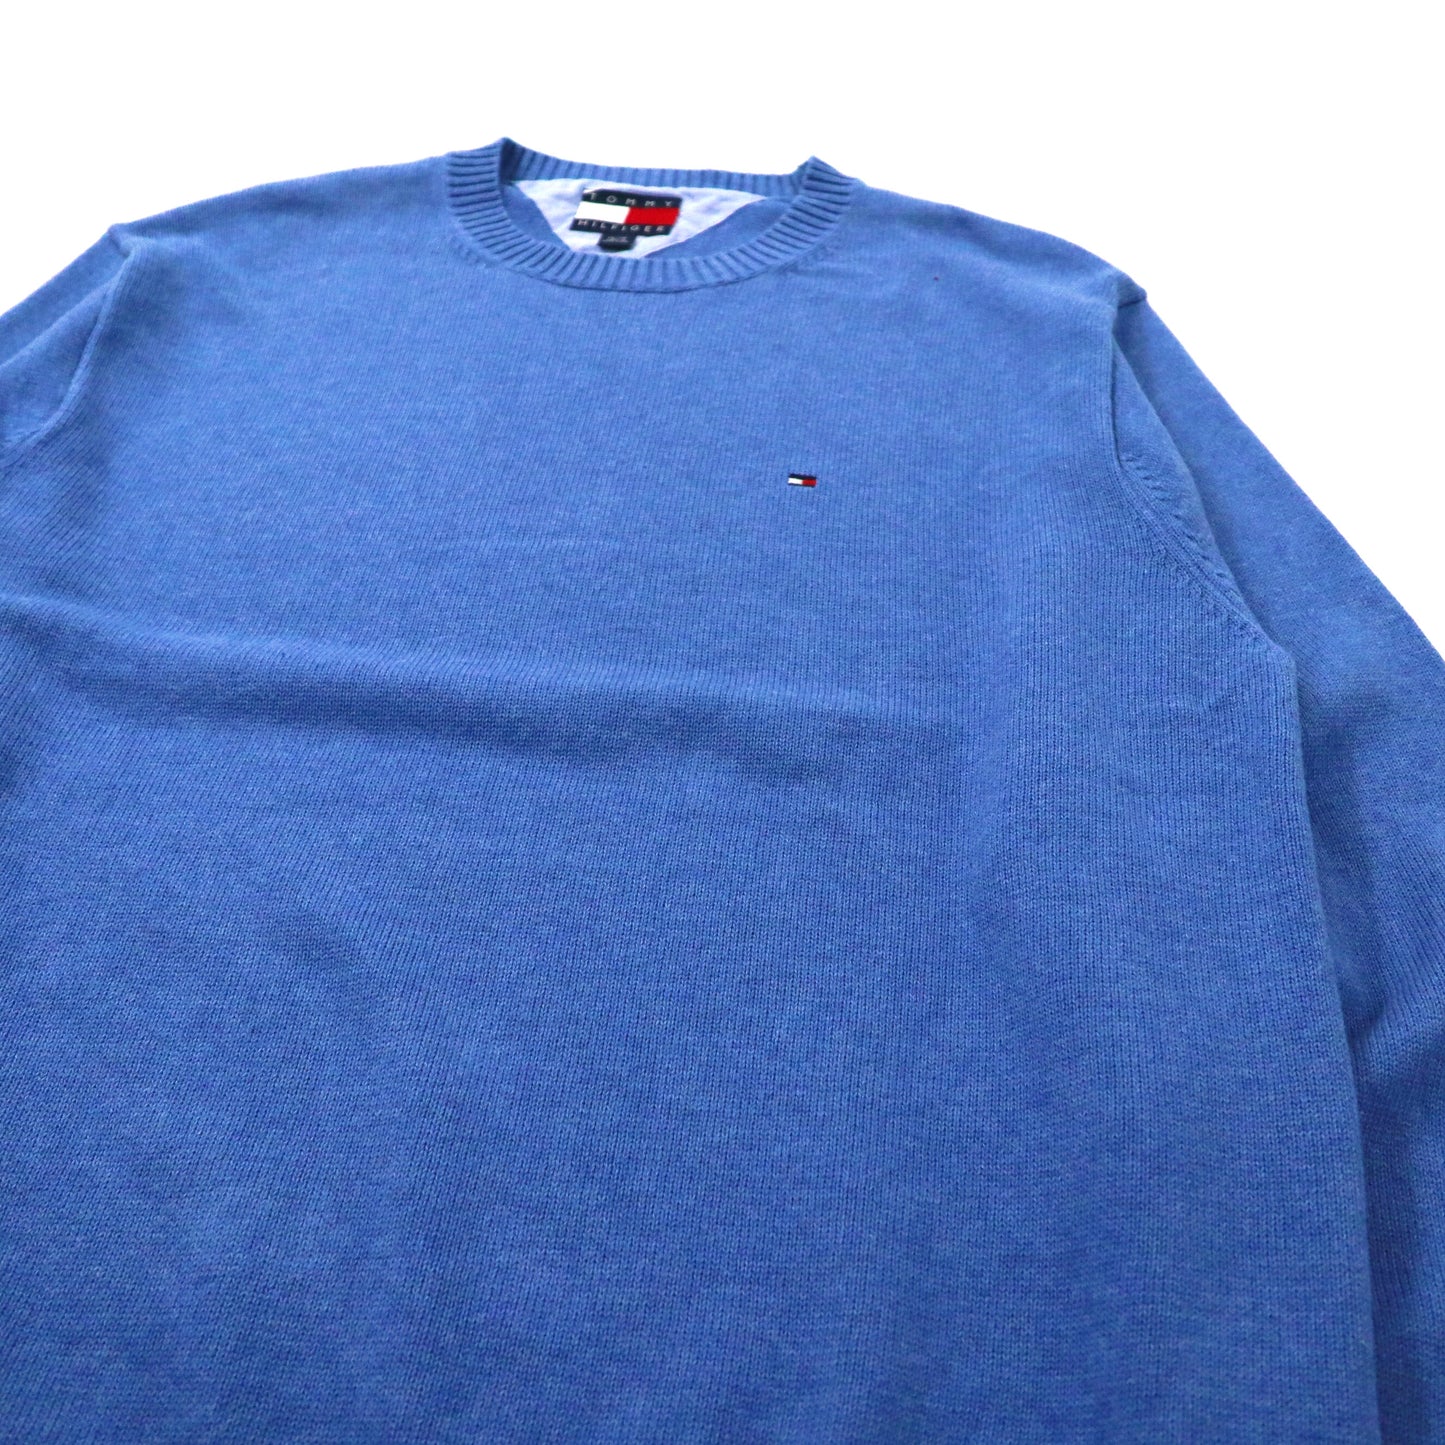 TOMMY HILFIGER クルーネックニット セーター XL ブルー コットン ワンポイントロゴ ビッグサイズ 90年代